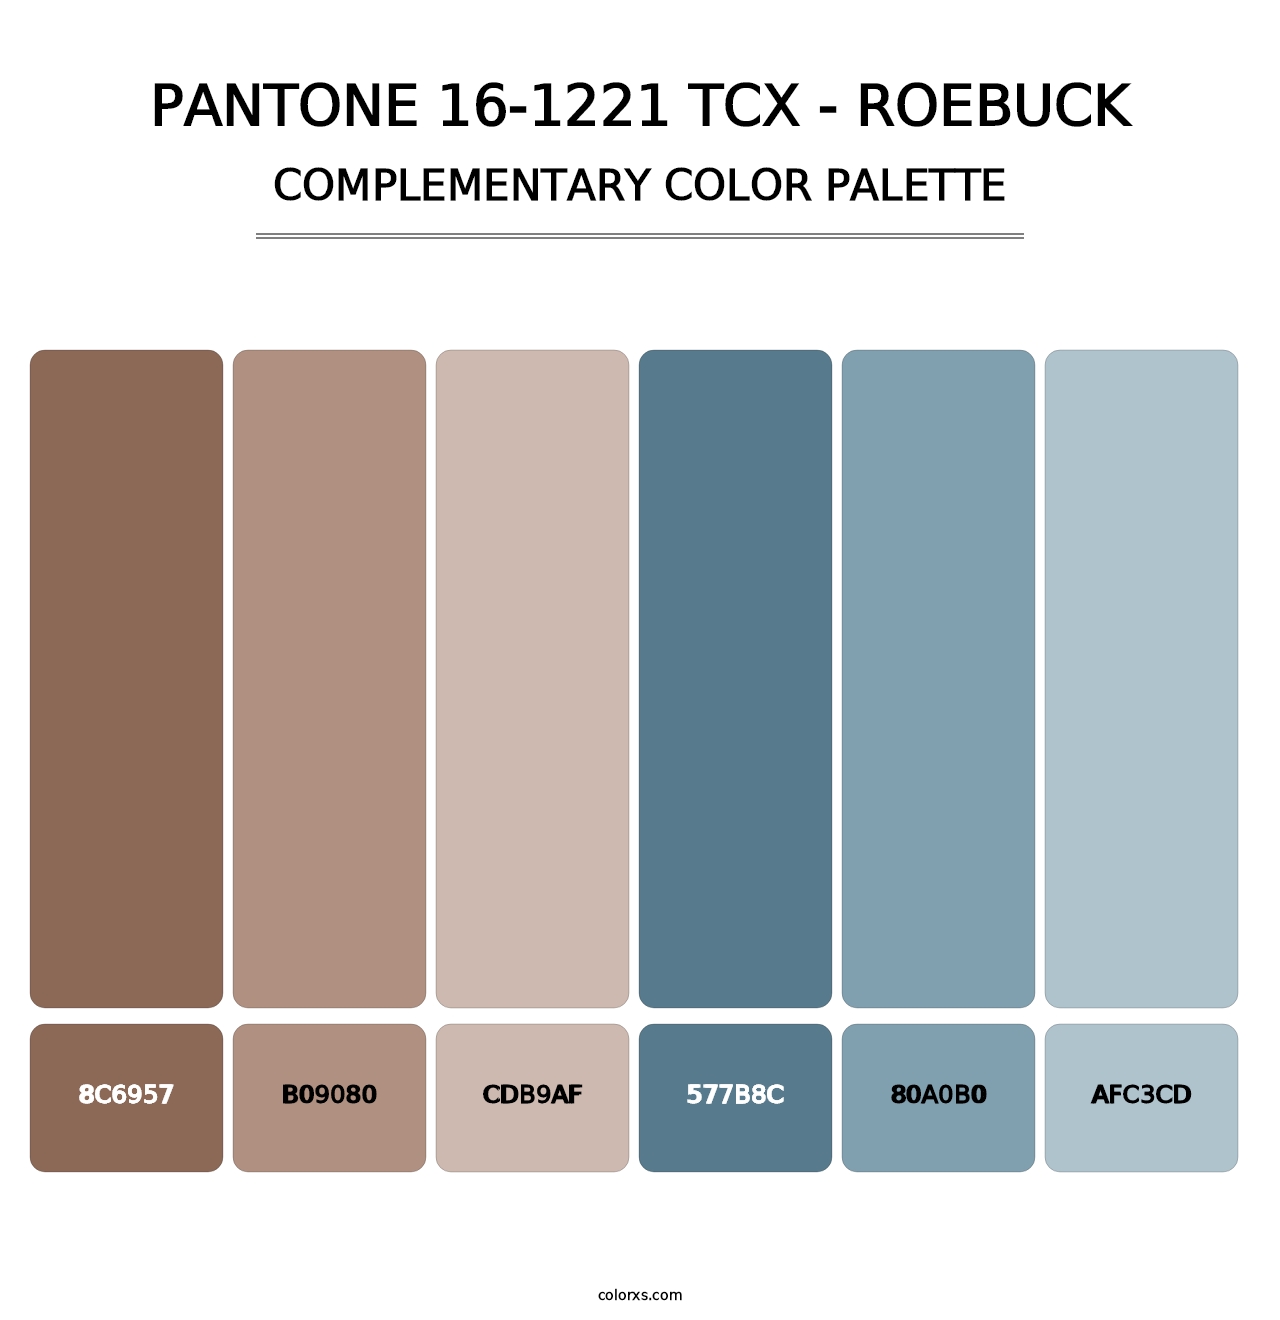 PANTONE 16-1221 TCX - Roebuck - Complementary Color Palette